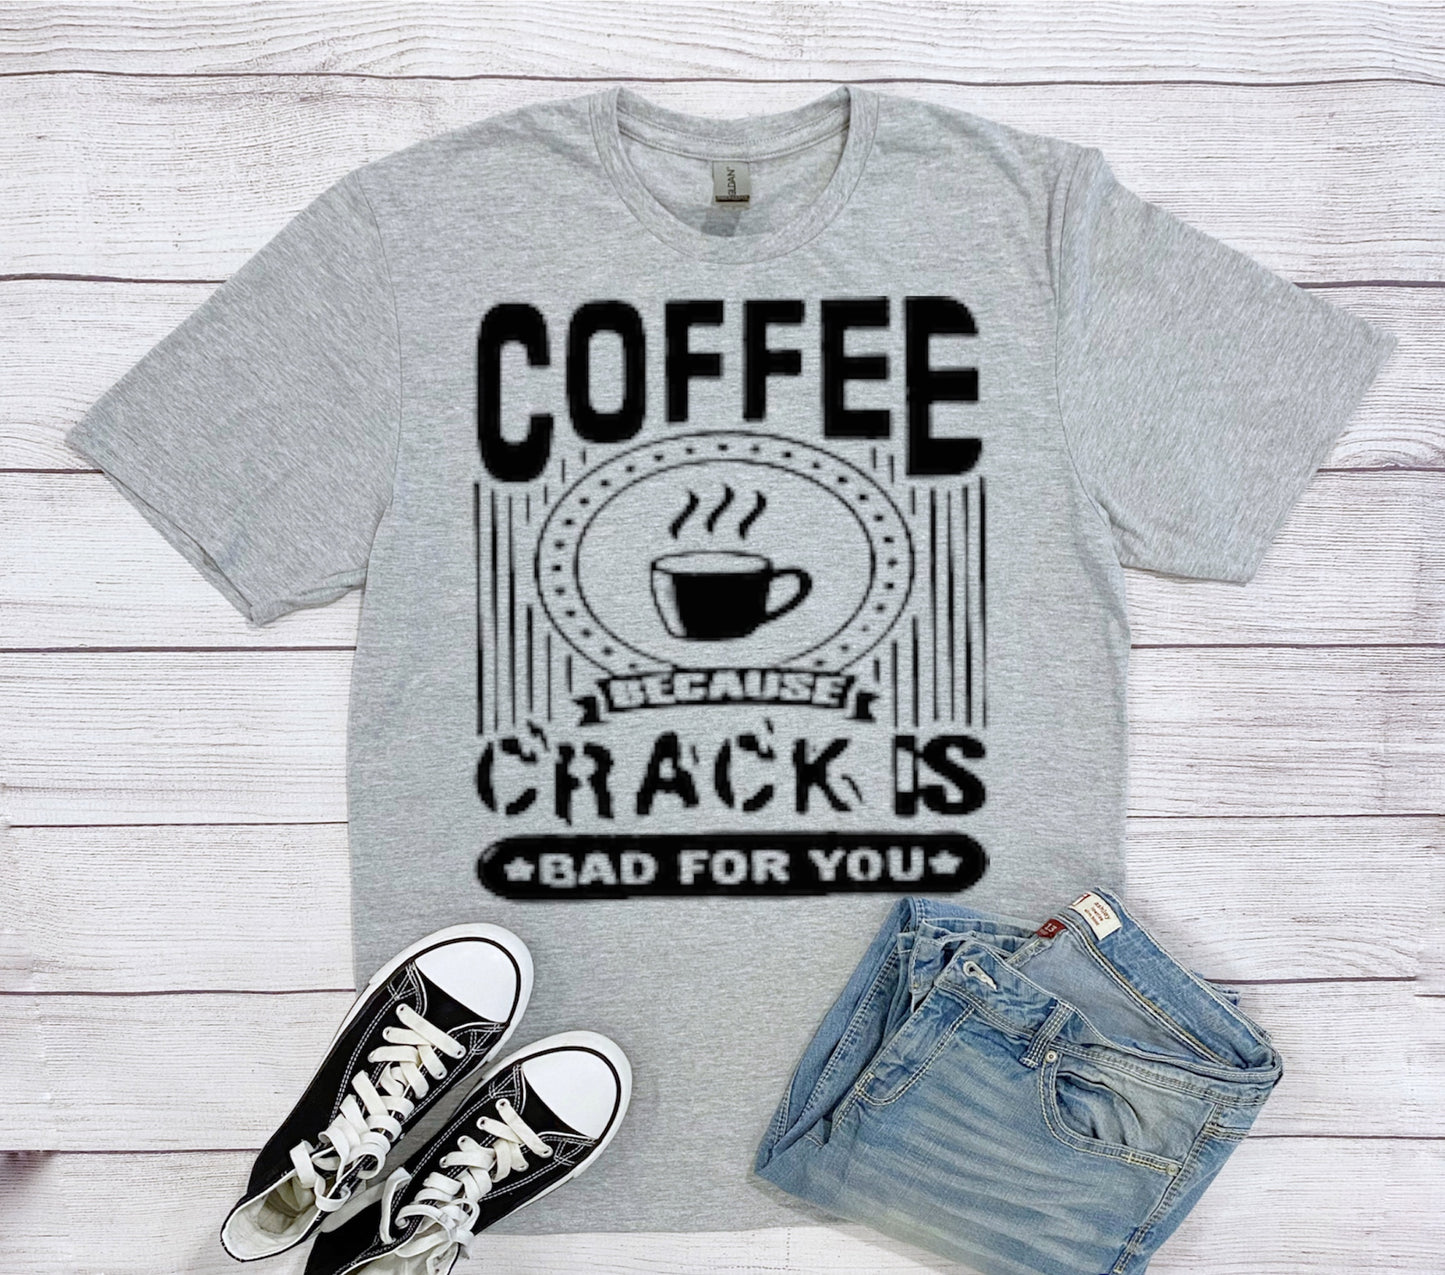 Coffee Because cracks bad for you tshirt